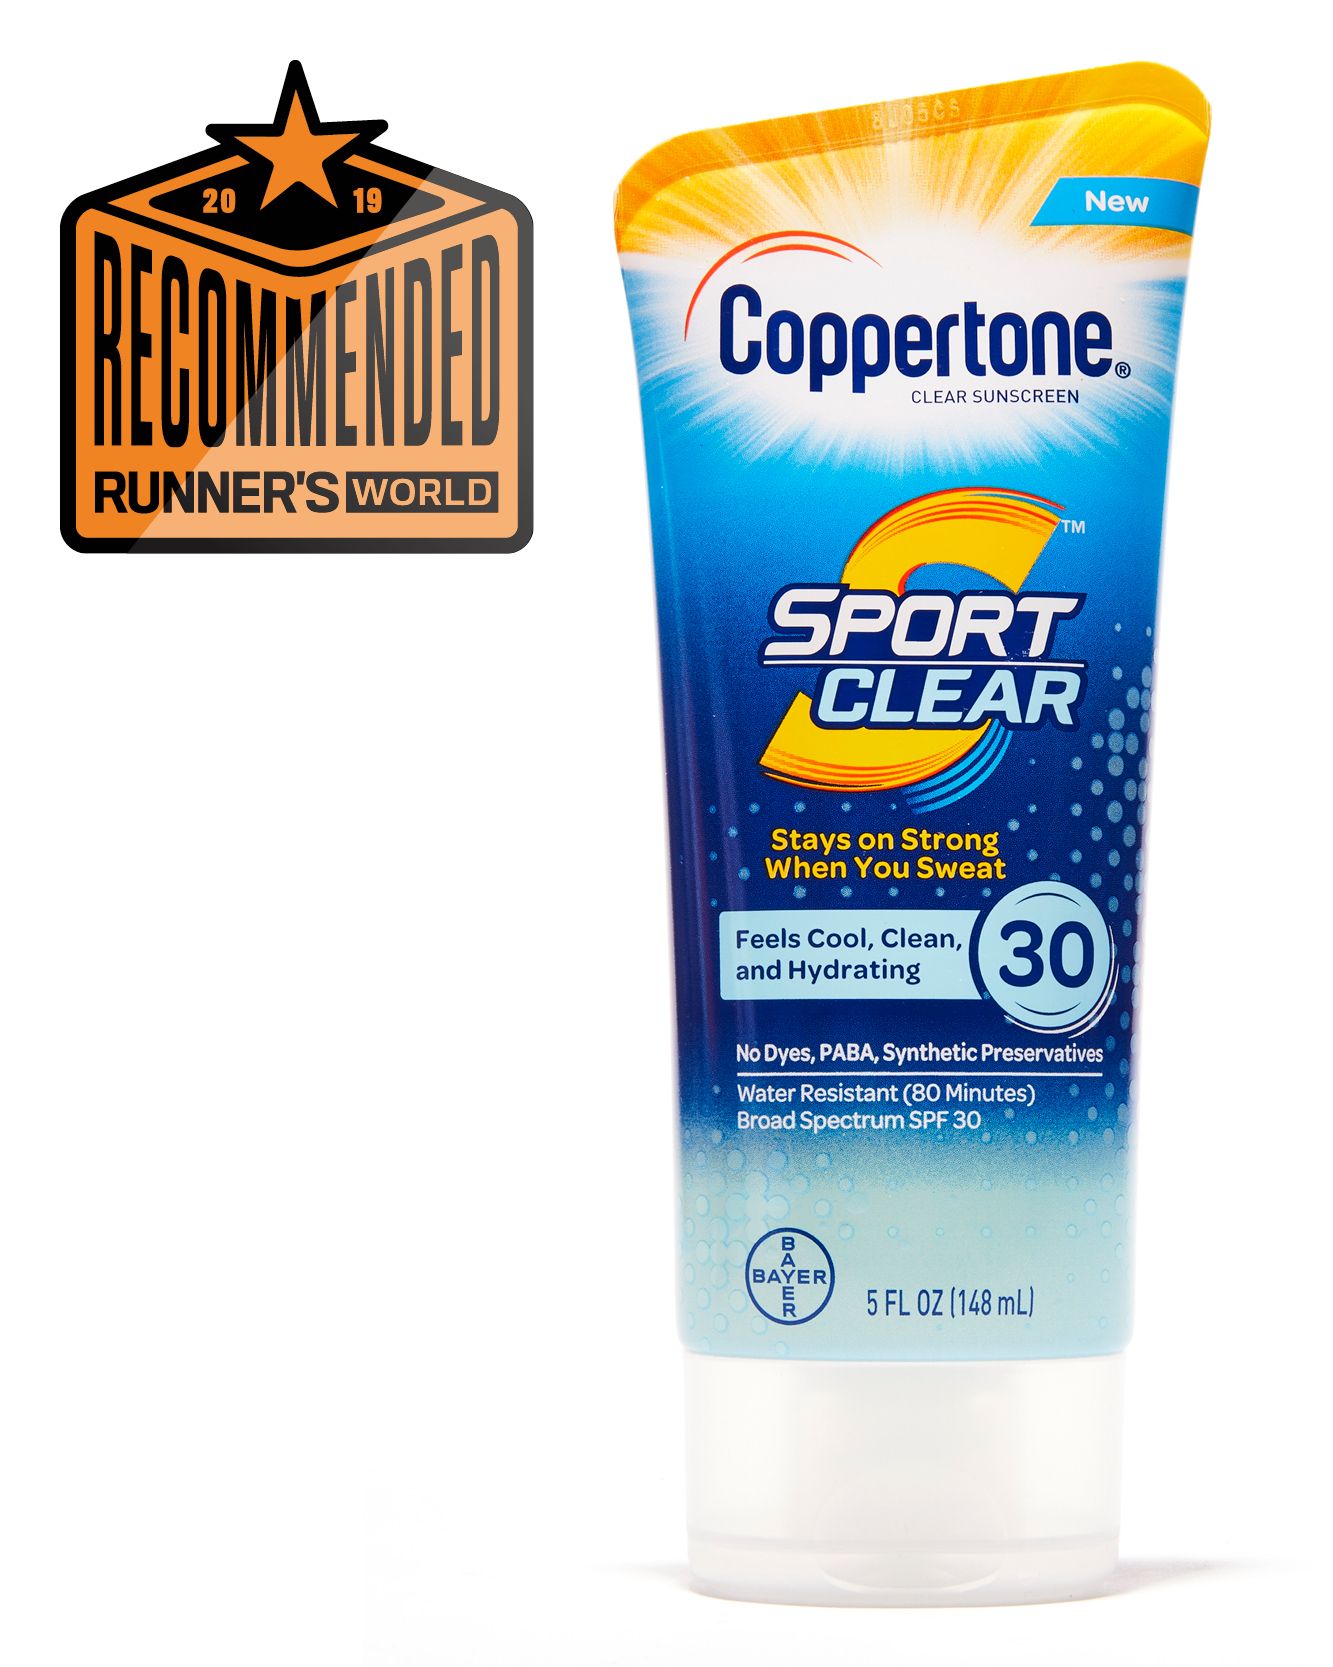 reef safe sunscreen coppertone